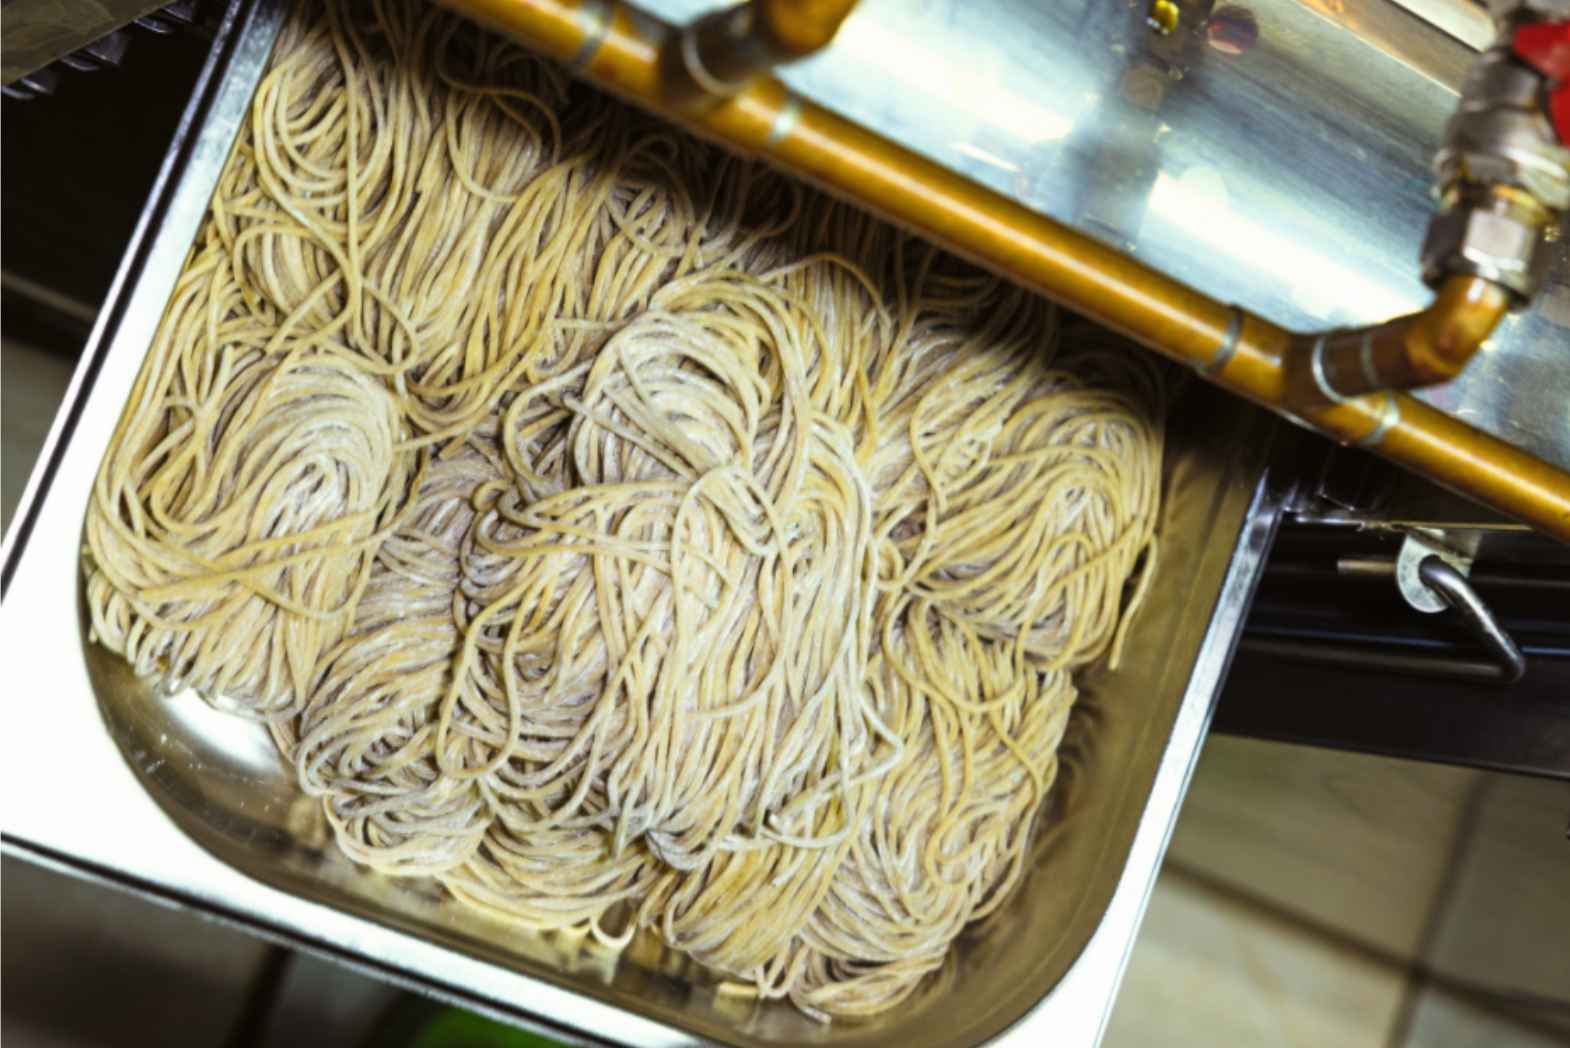 How To Make Noodles by SupaYaRamen